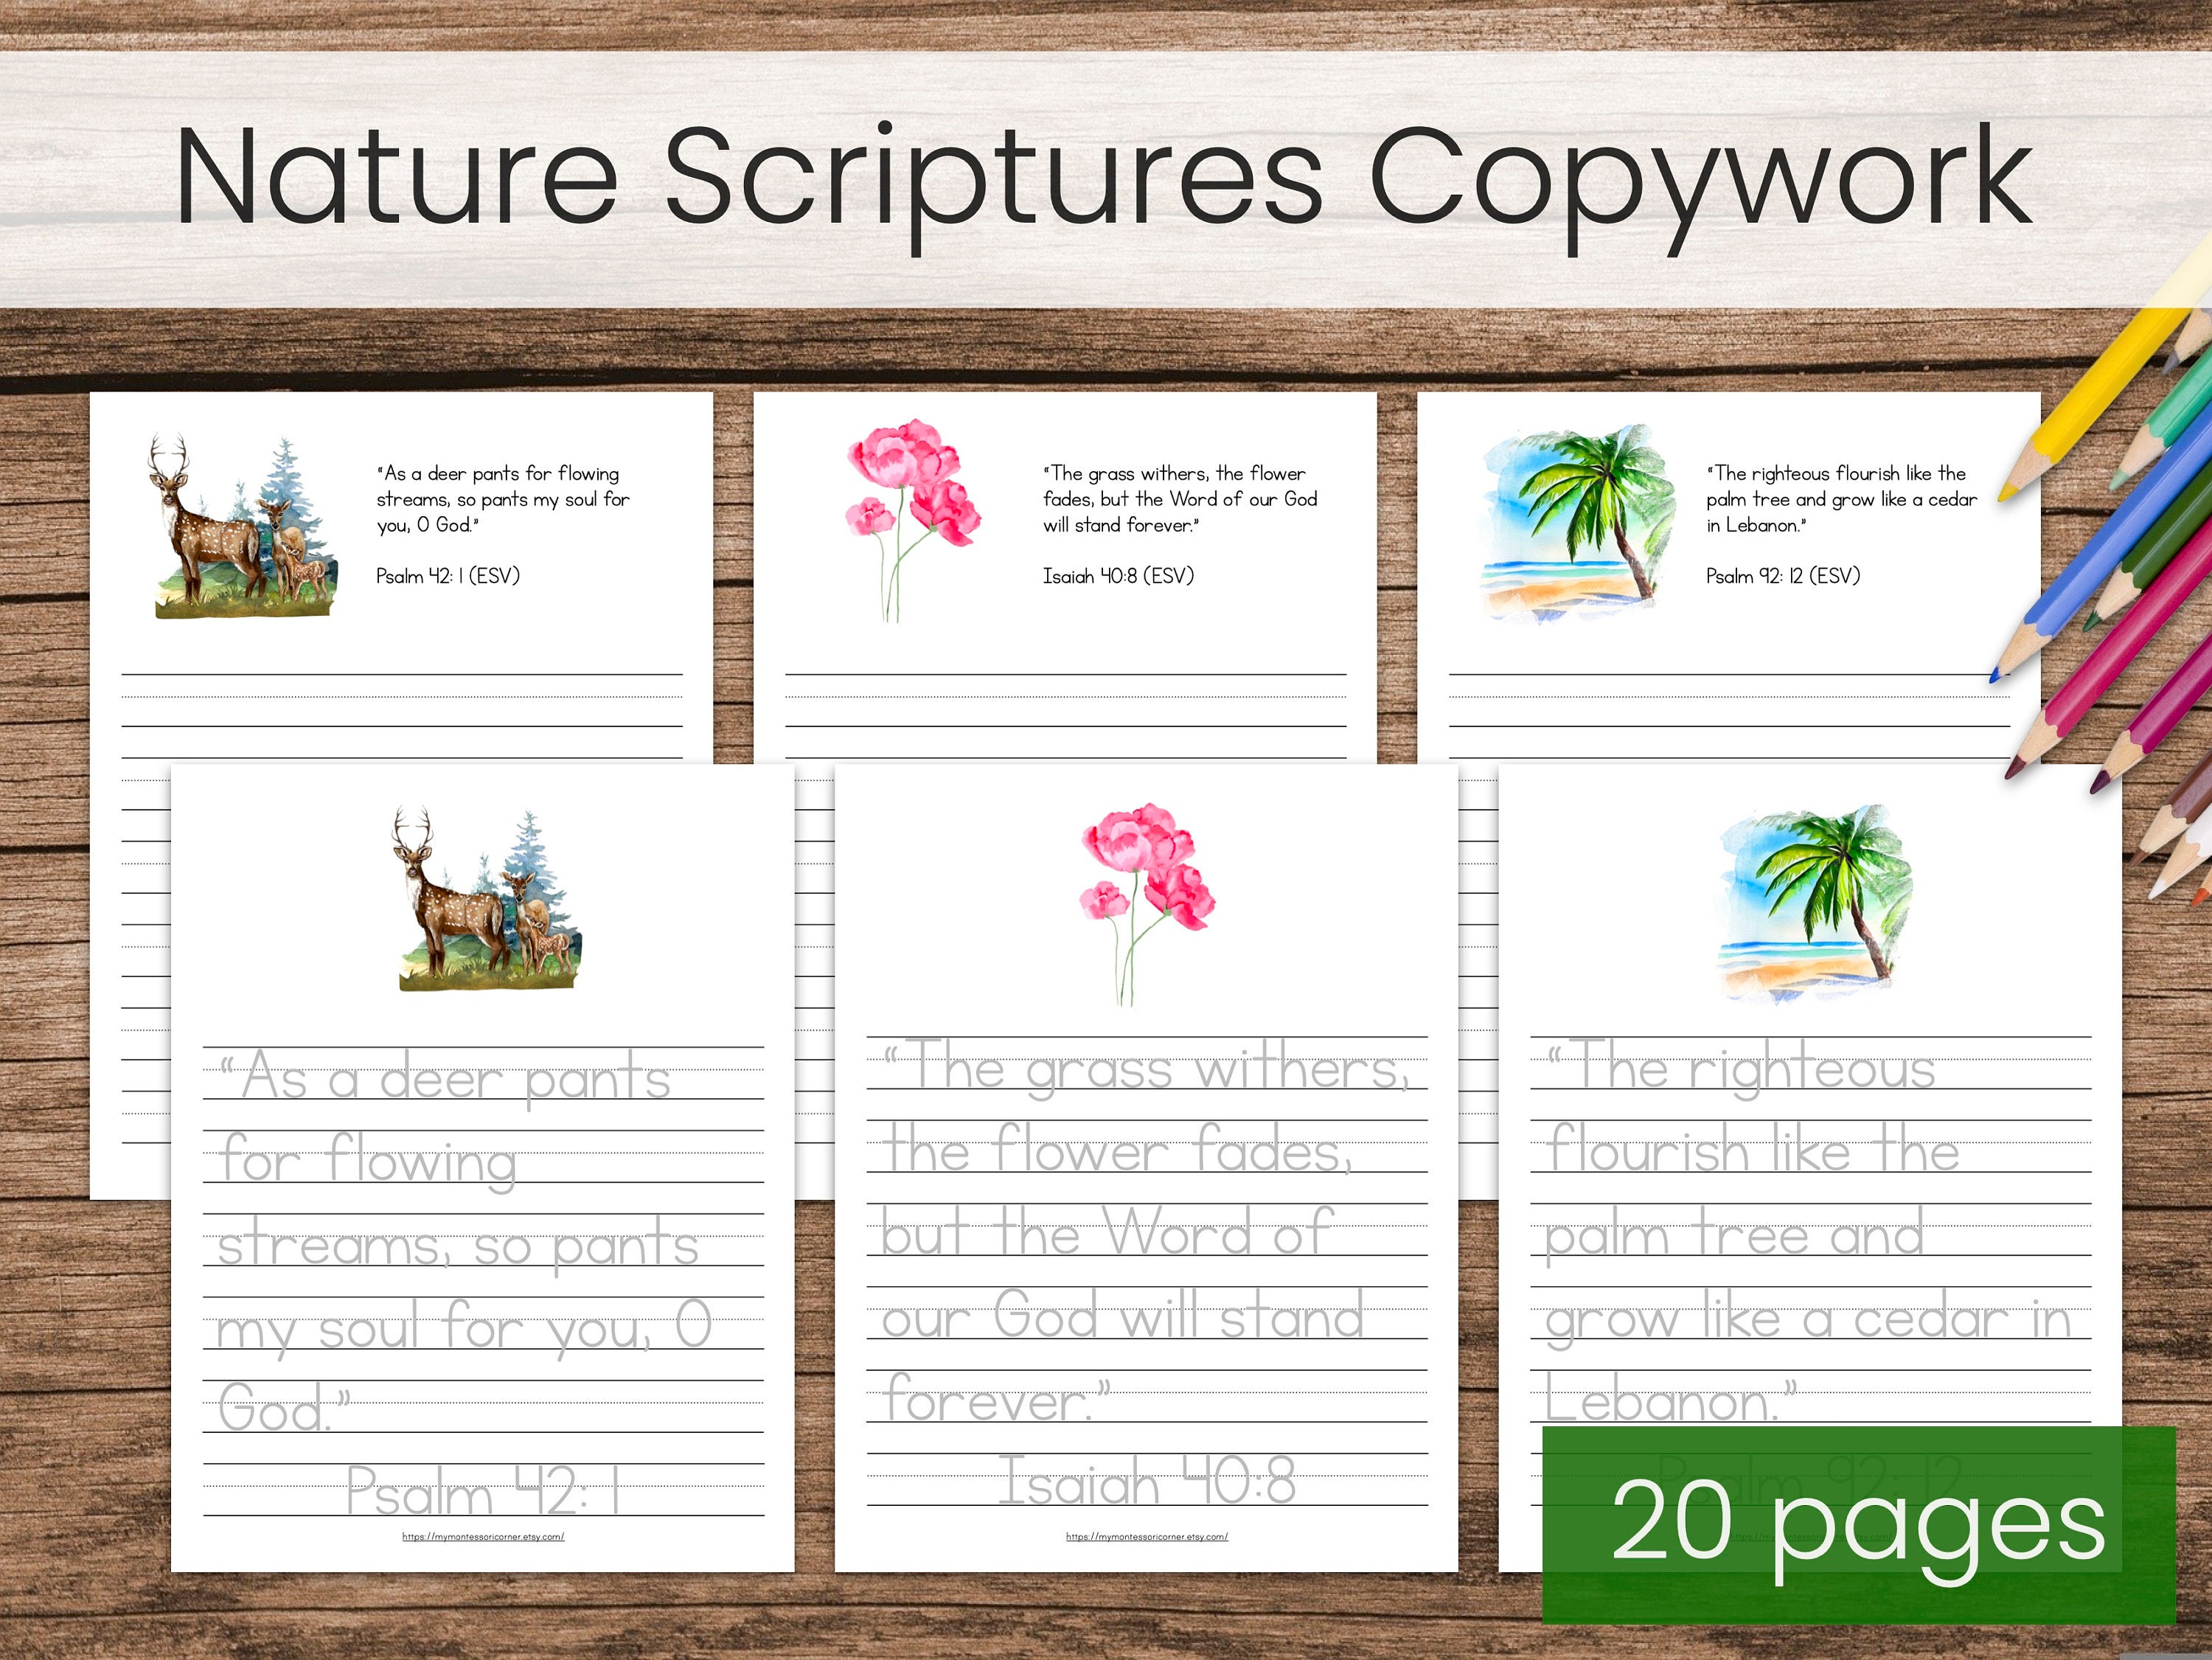 Cursive Name Writing Worksheet, Printable Handwriting Copywork, Script  Alphabet Tracing Activities Number Practice Mat Montessori Homeschool 